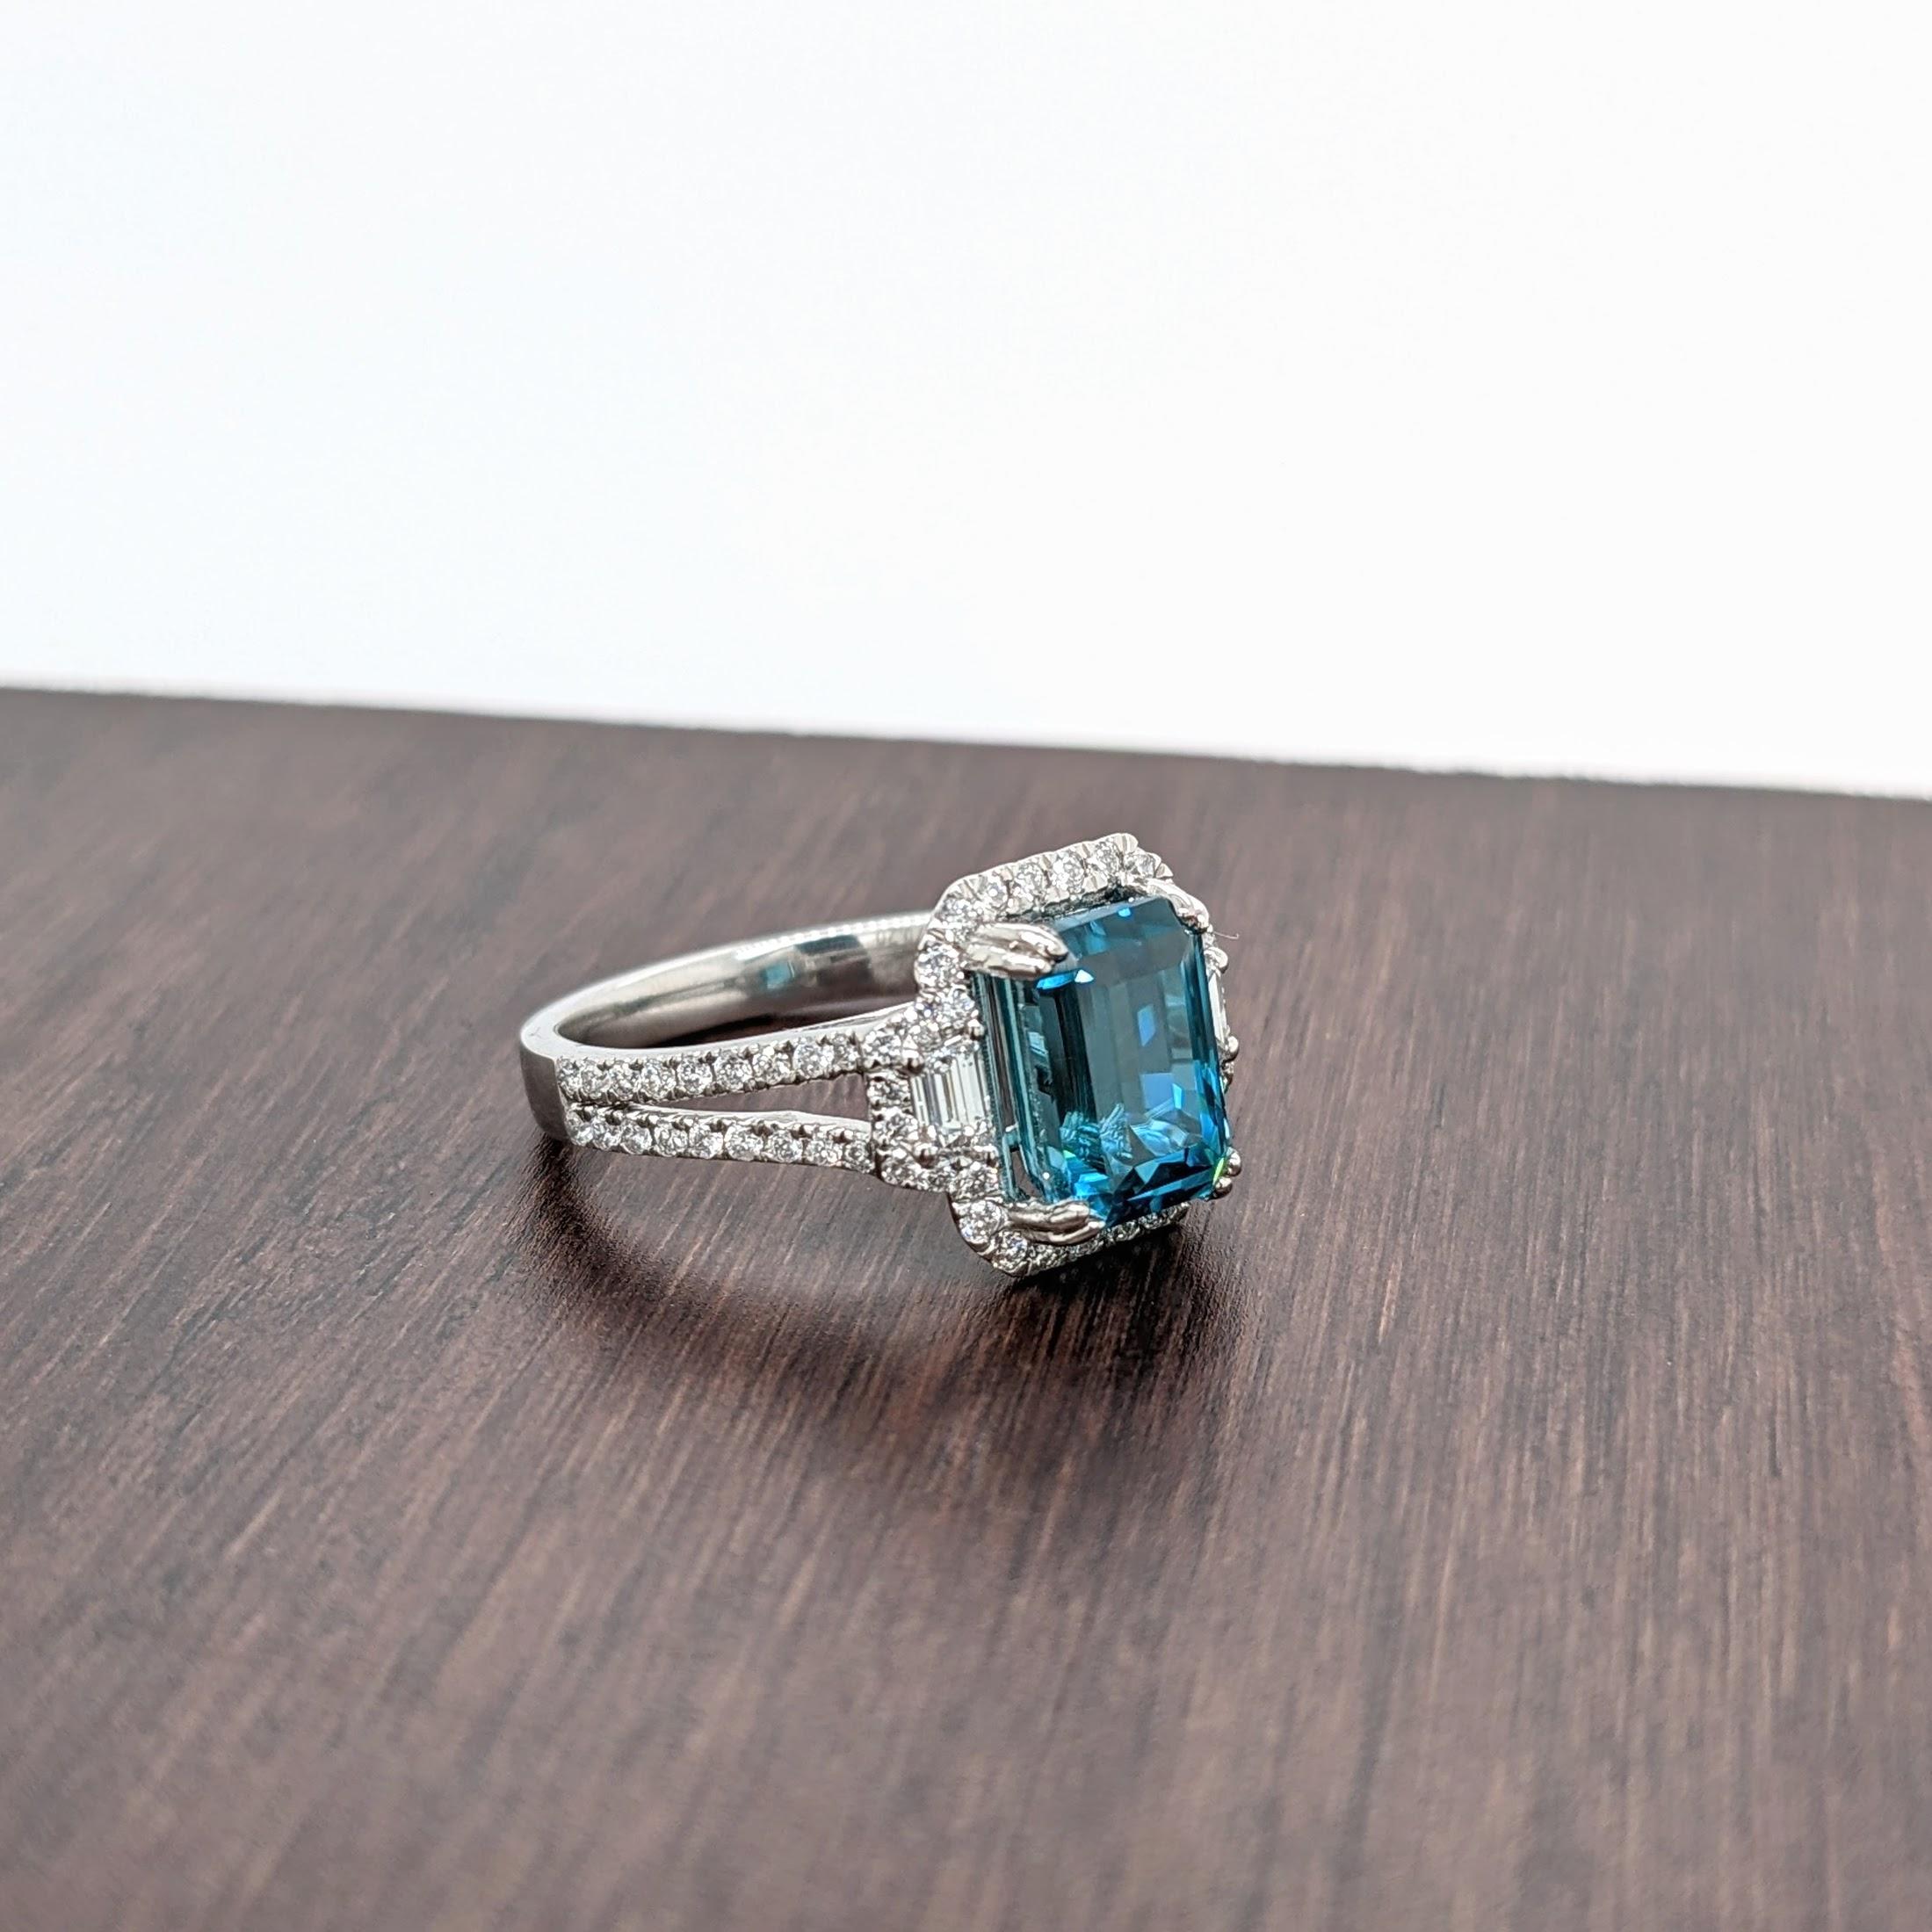 Women's 5.3ct Blue Zircon Ring in Platinum w Natural Diamonds Emerald Cut 9x7mm